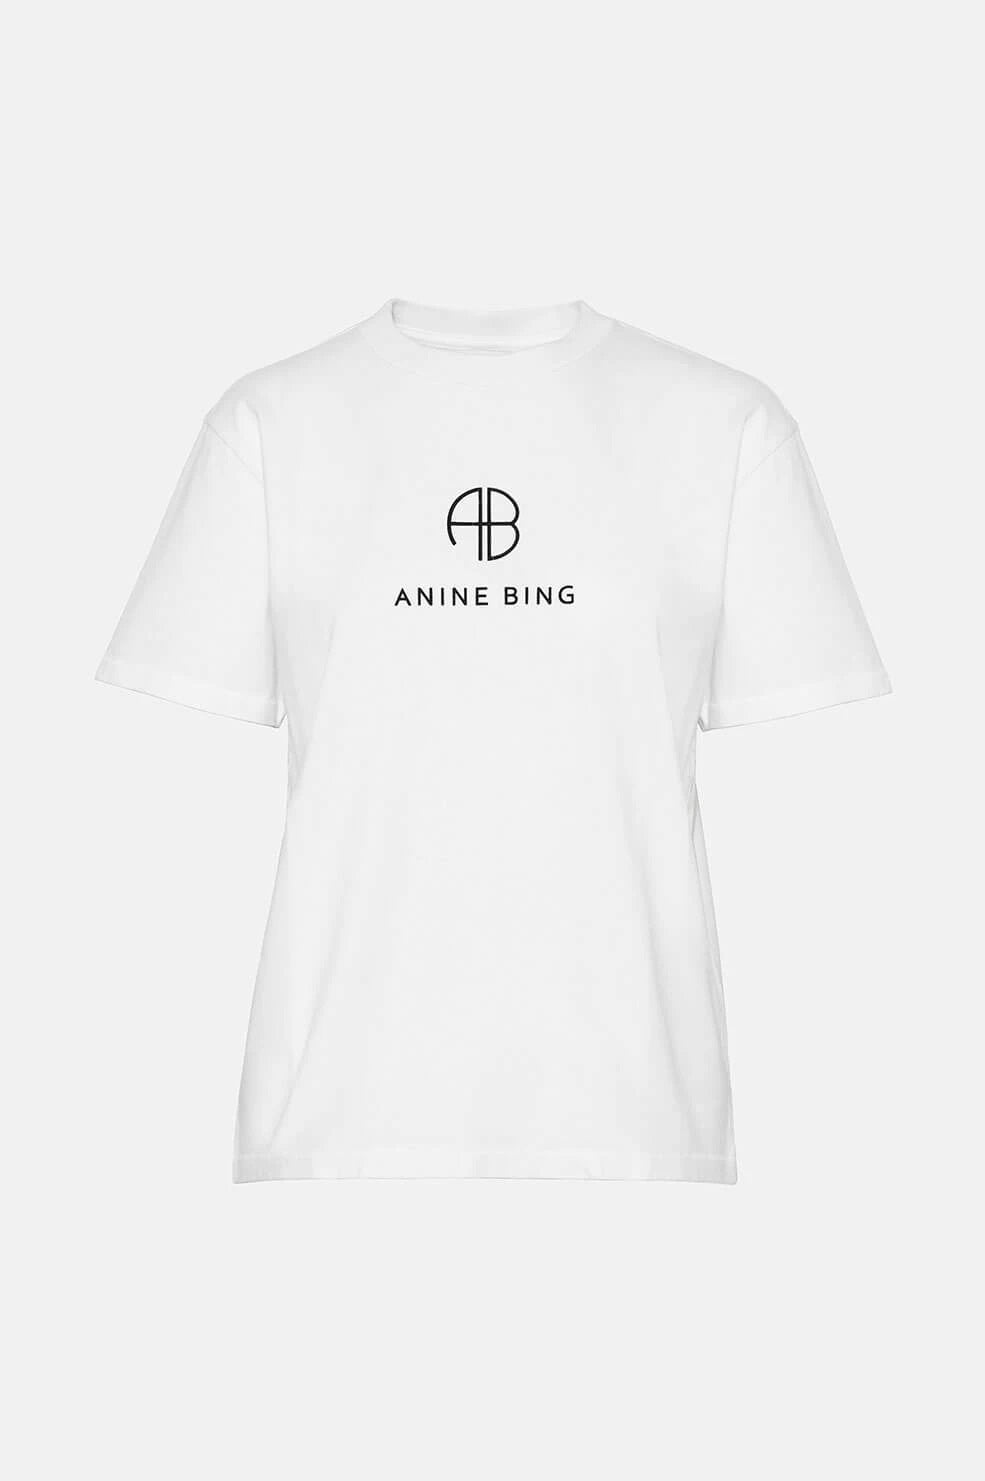 Anine Bing - Hudson Monogram Tee in White